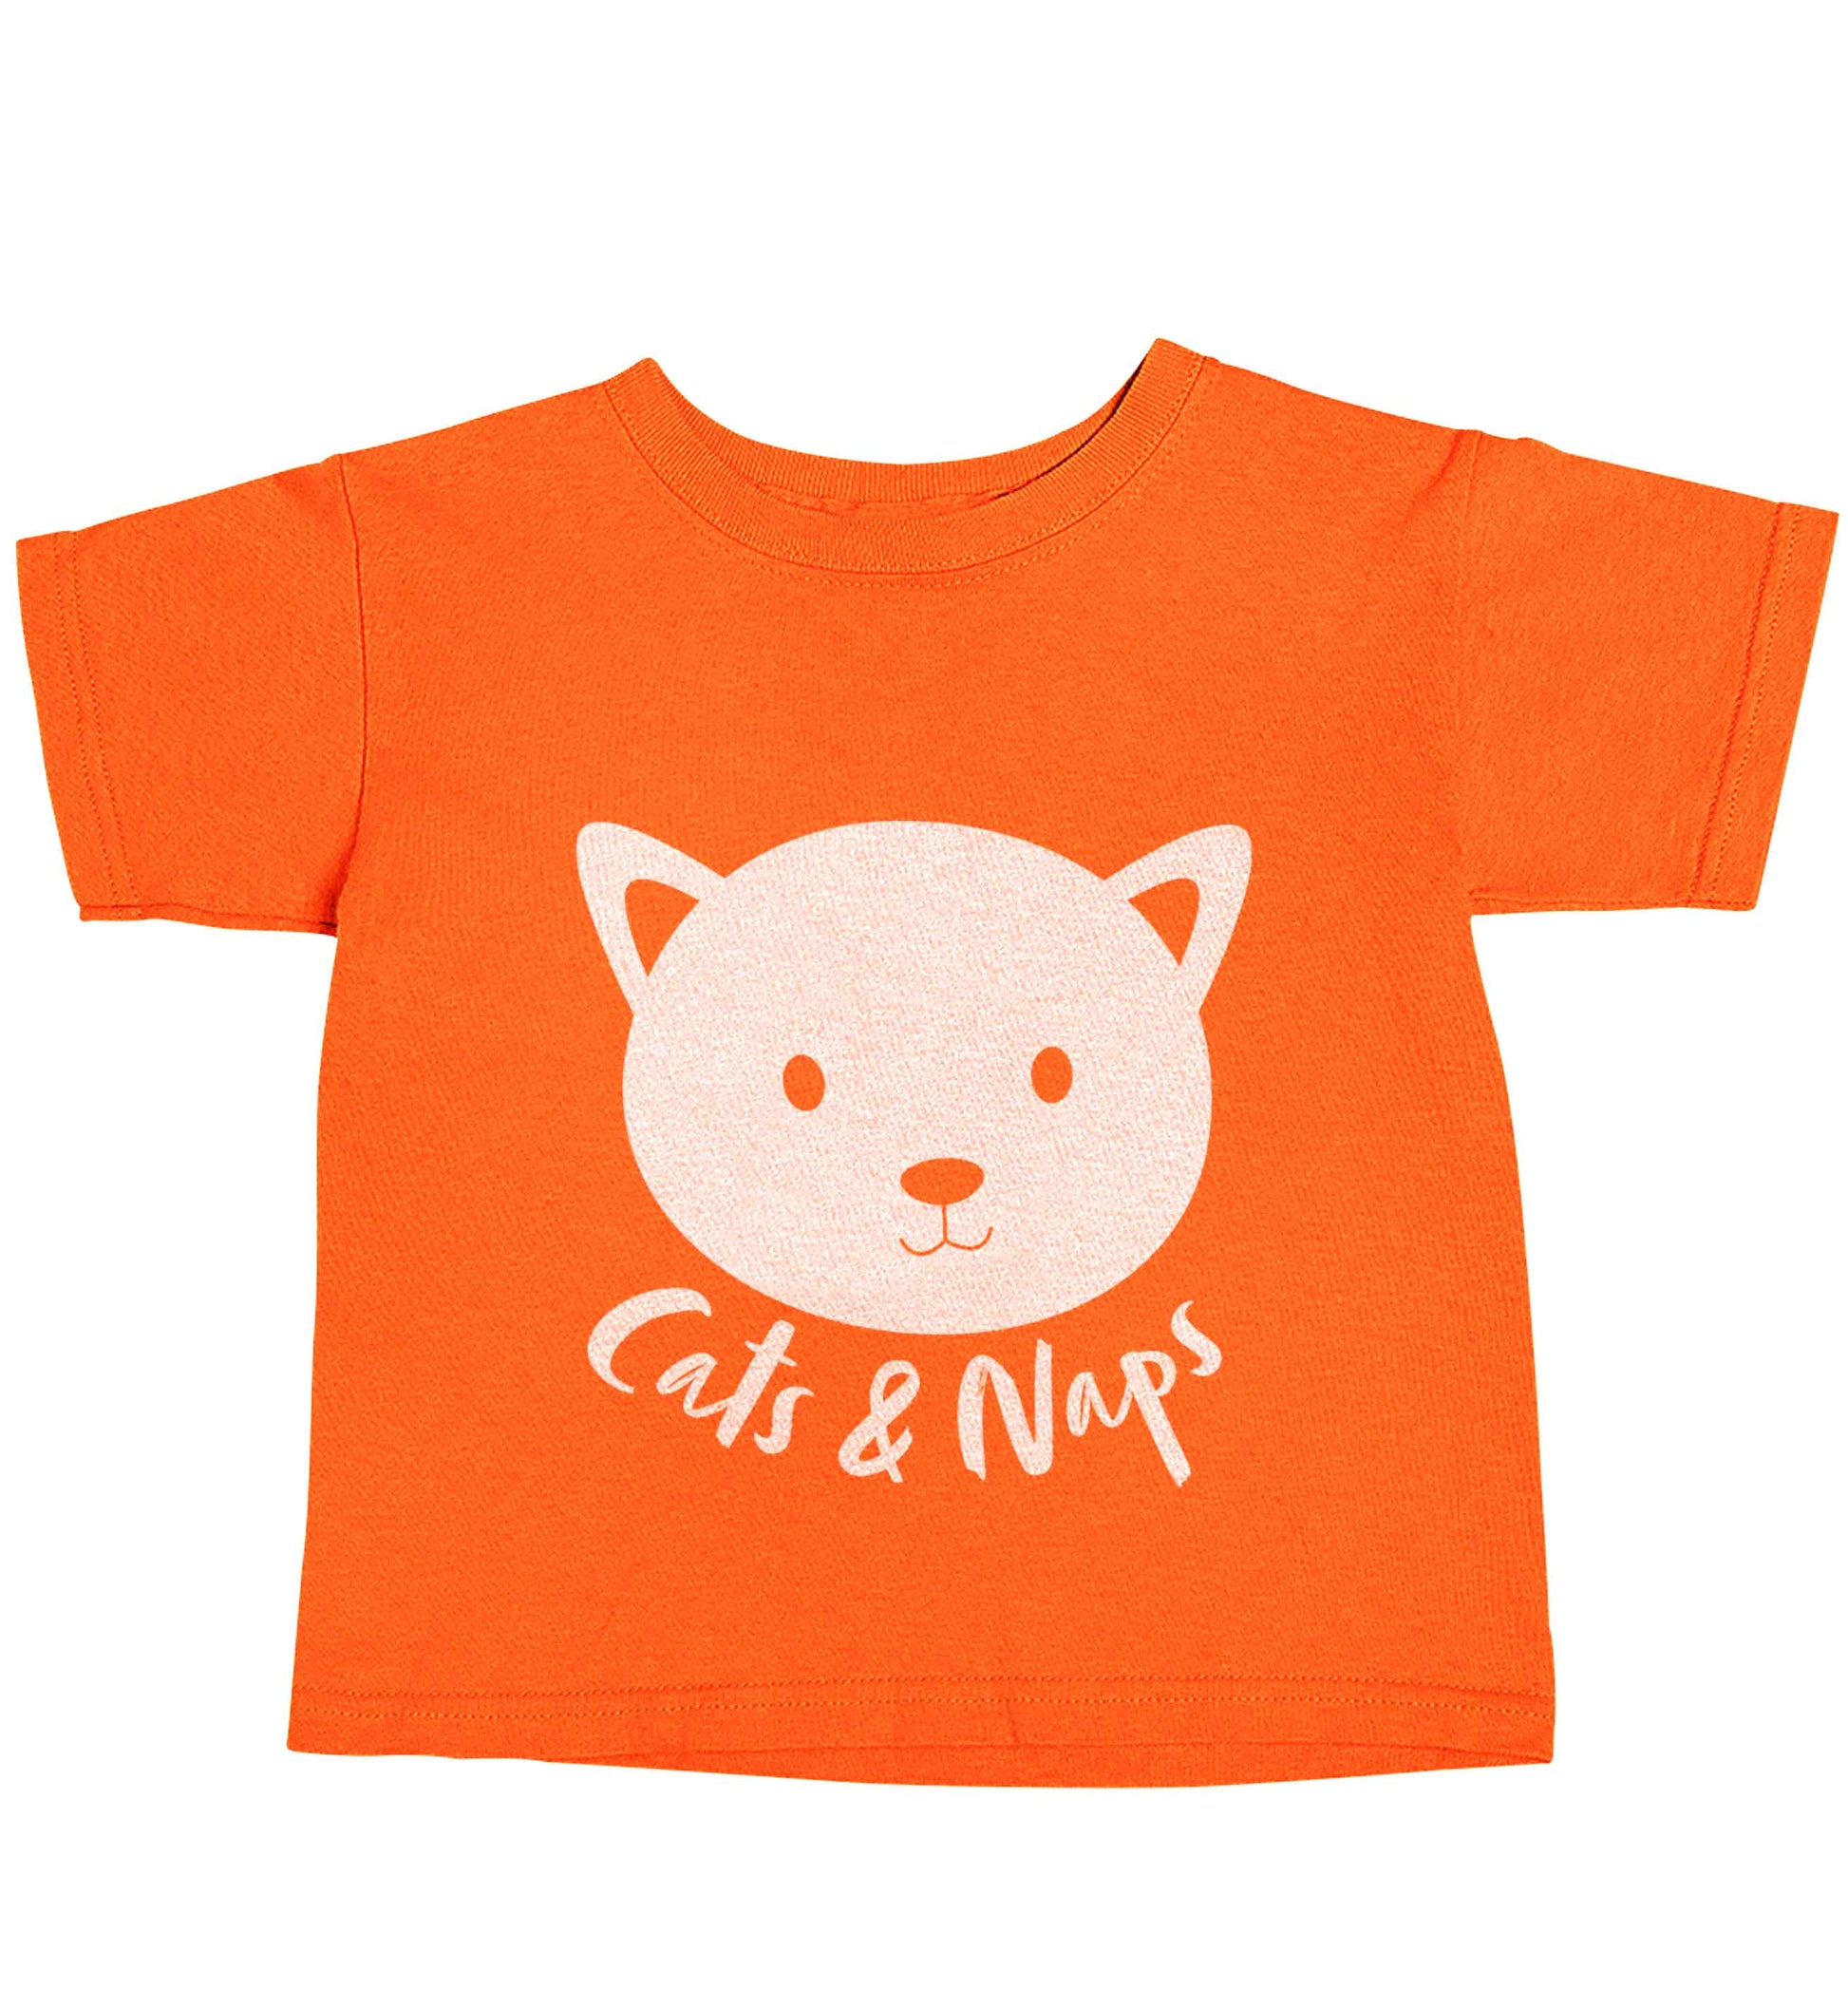 Cats and naps Kit orange baby toddler Tshirt 2 Years